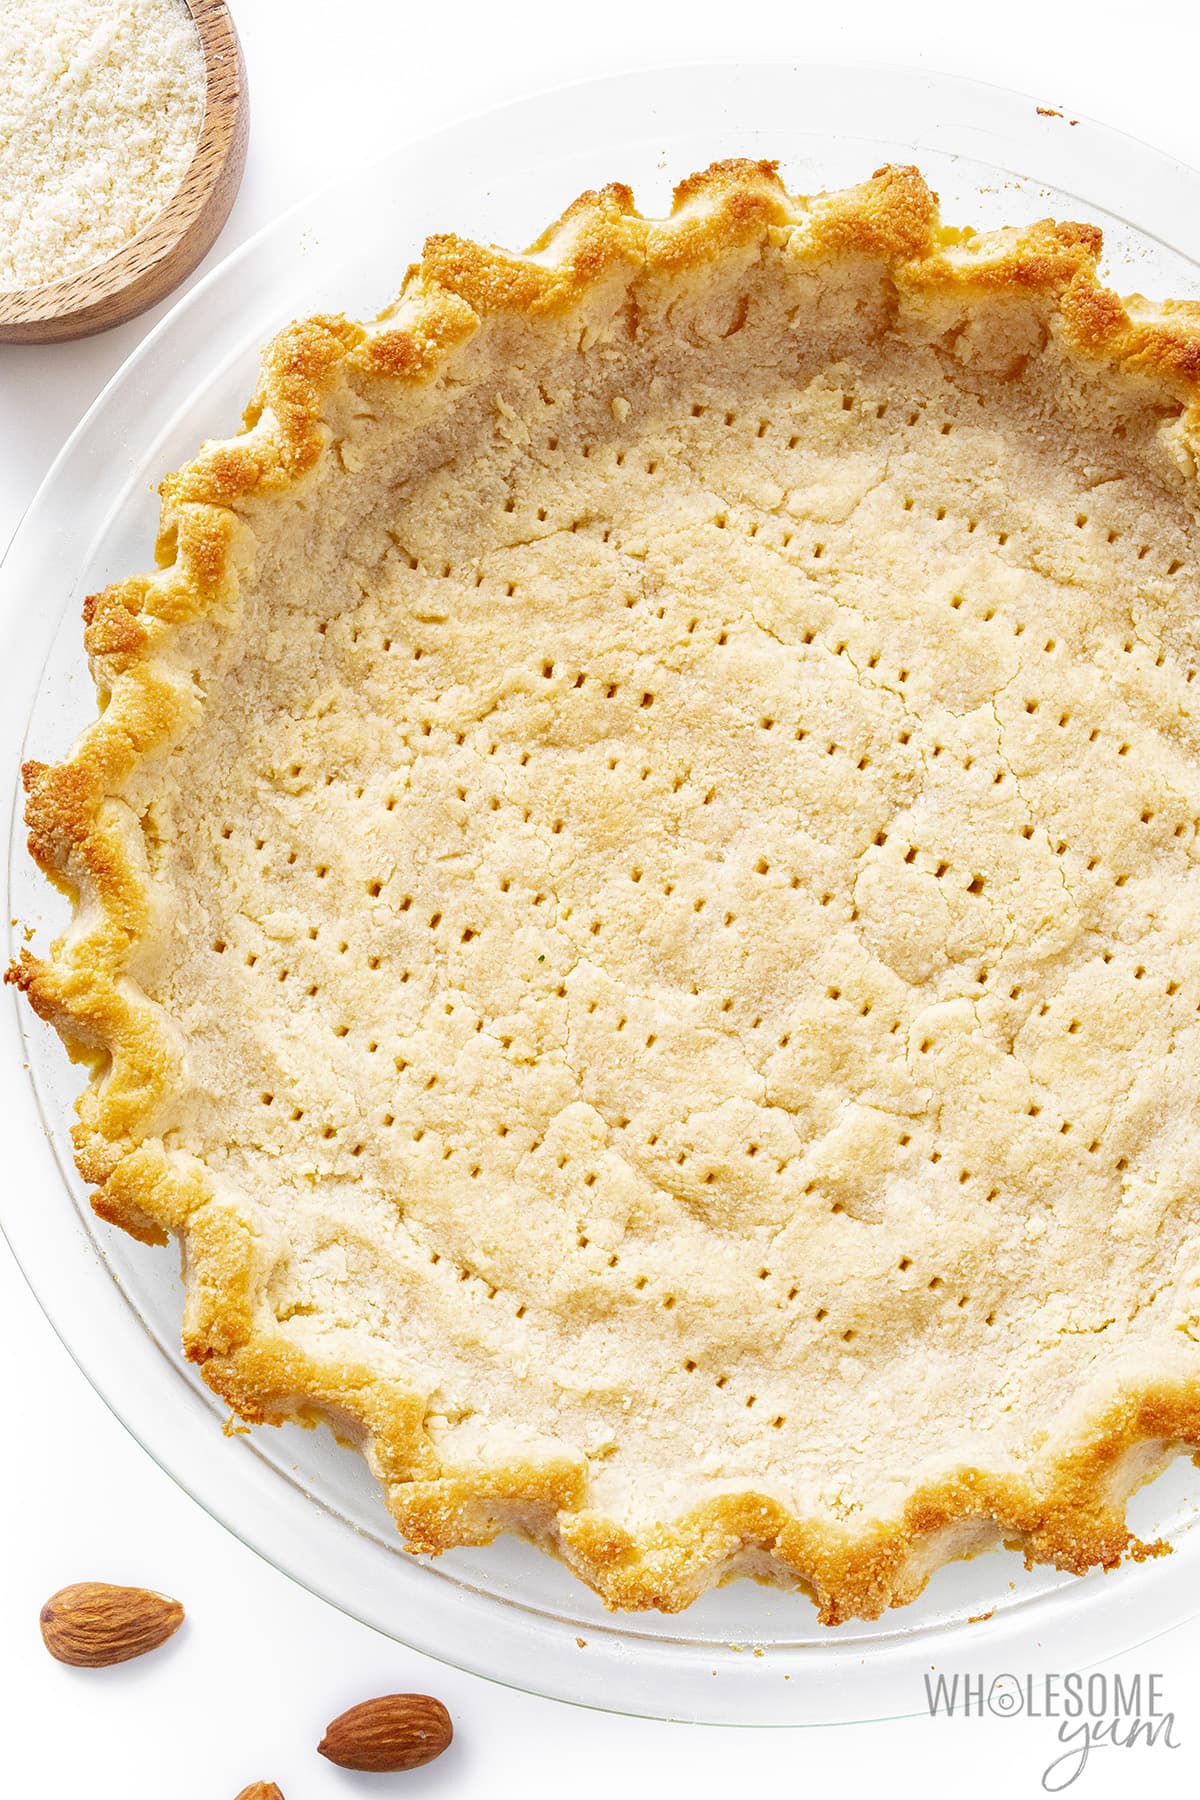 Keto pie crust recipe next to almond flour.